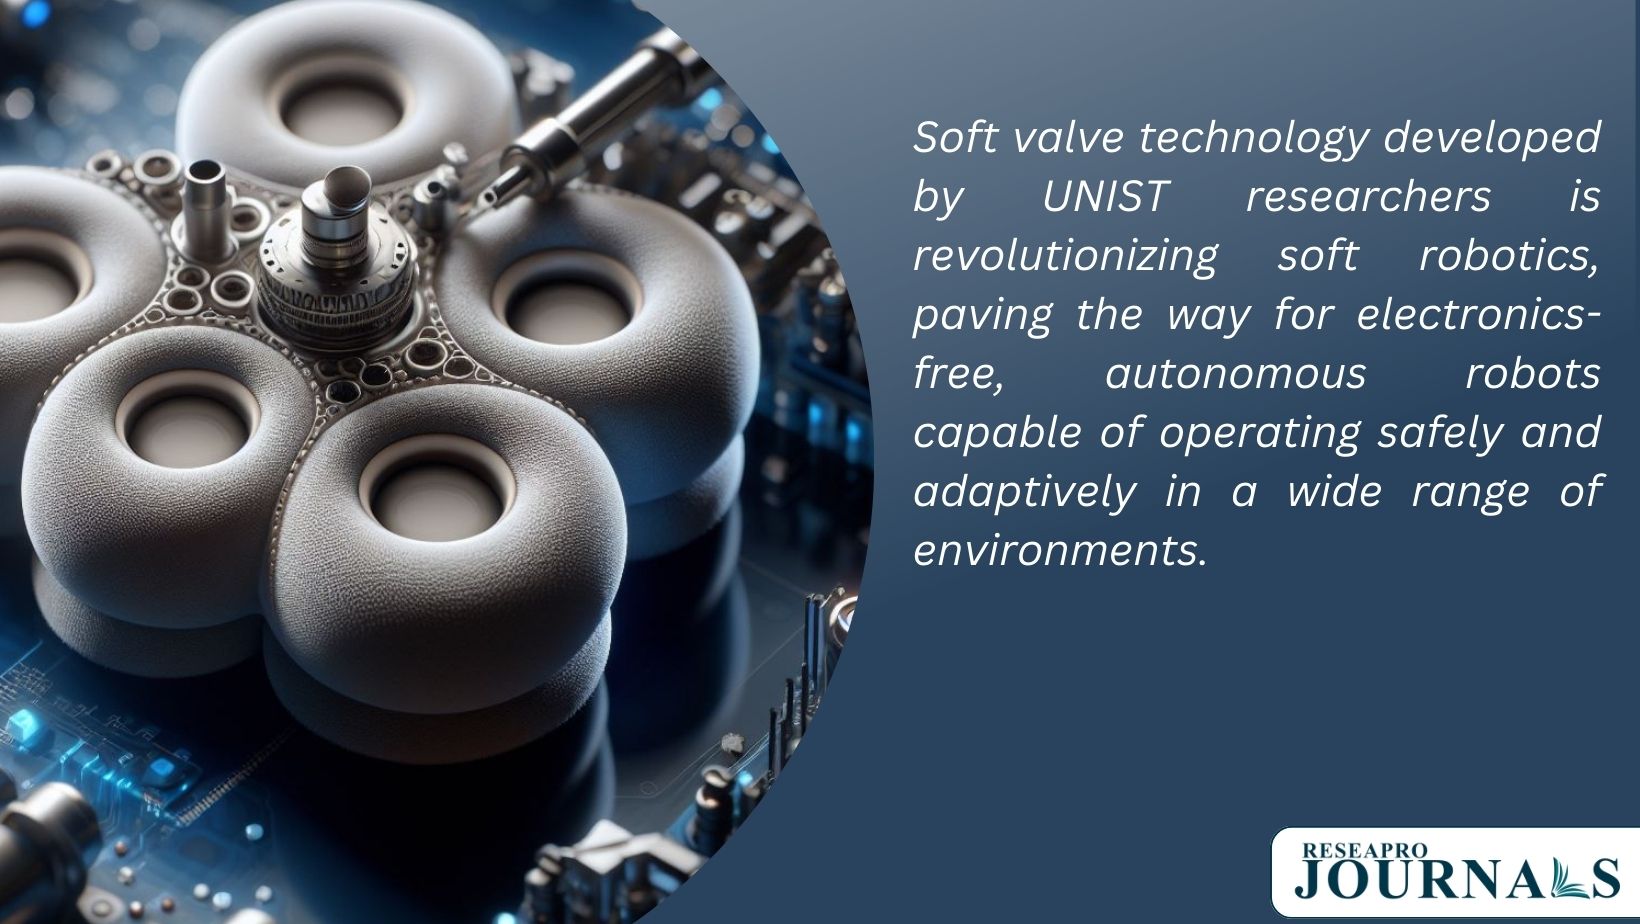 Soft valve technology revolutionizes soft robotics